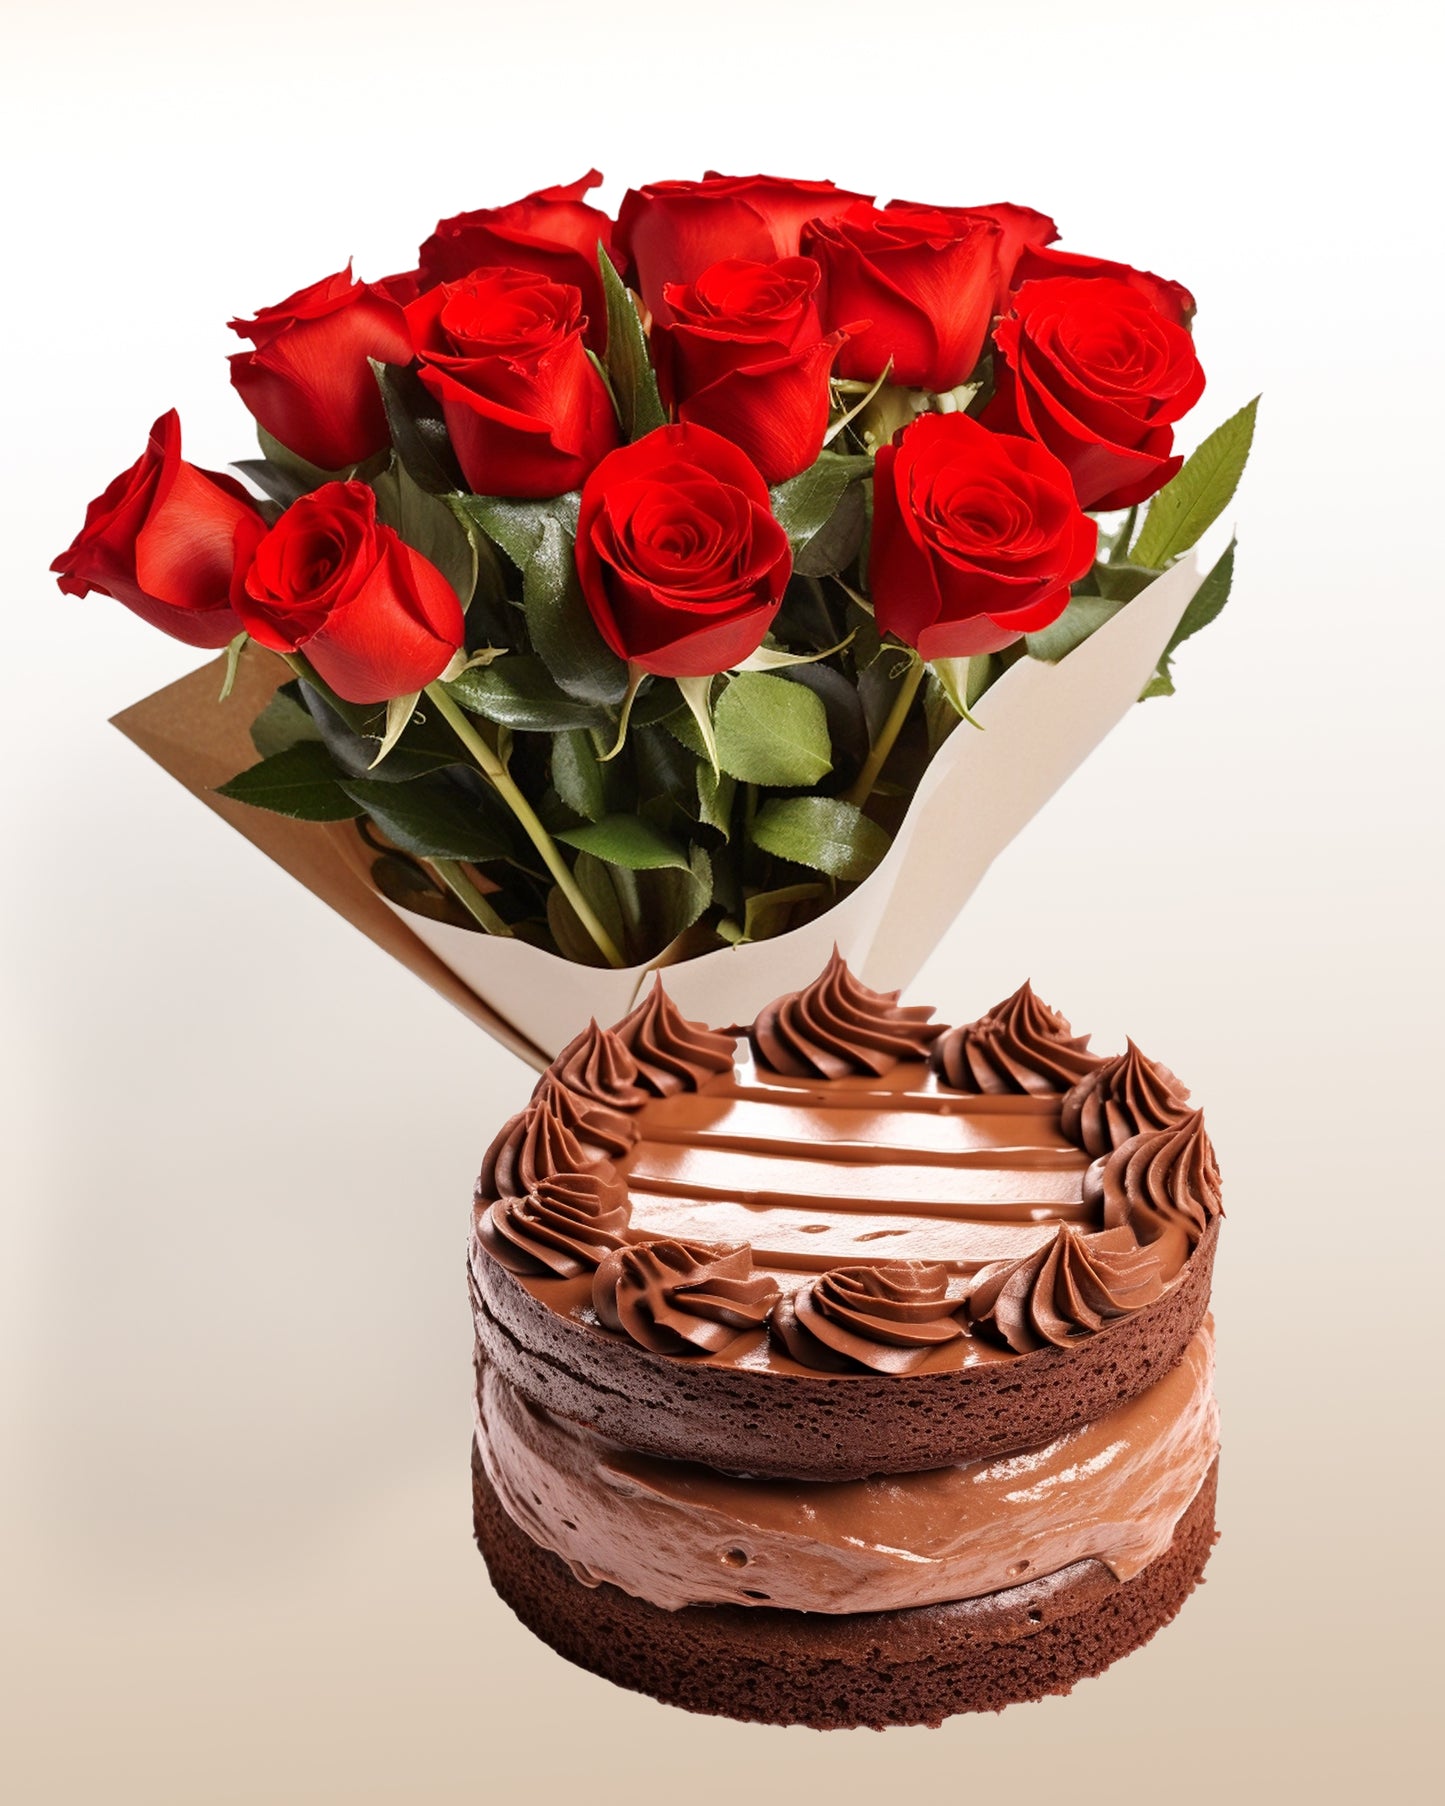 Combo Exquisitez: Torta 12 Personas + Bouquet 12 Rosas